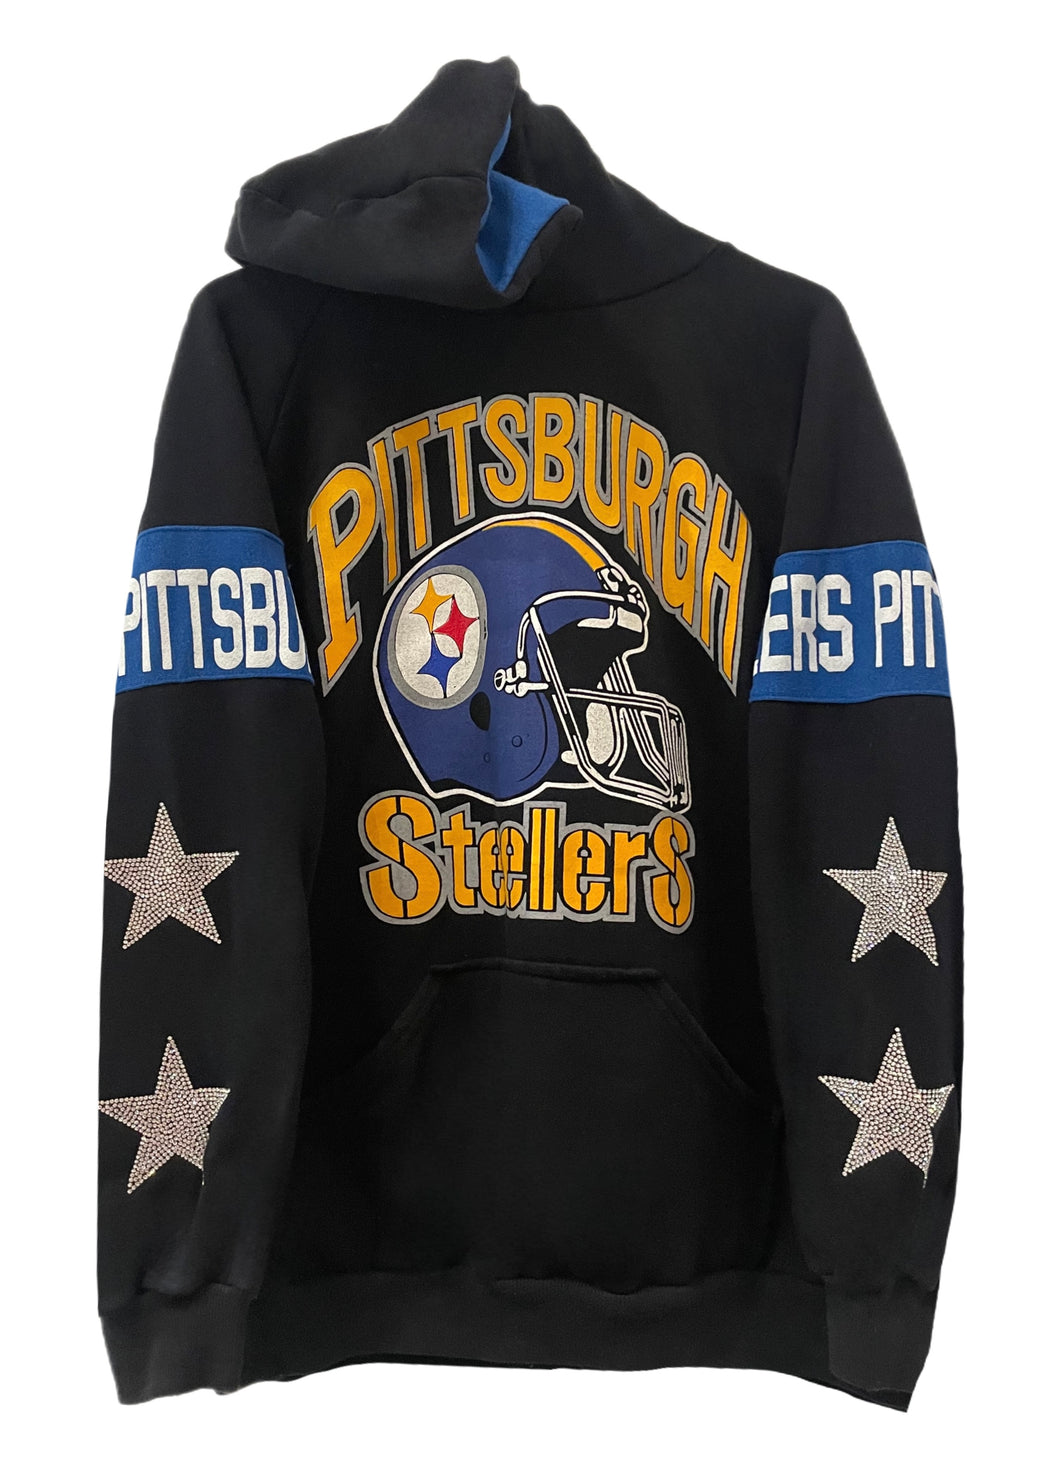 Pittsburgh Steelers, NFL One of a KIND Vintage Hoodie with Crystal Star Design